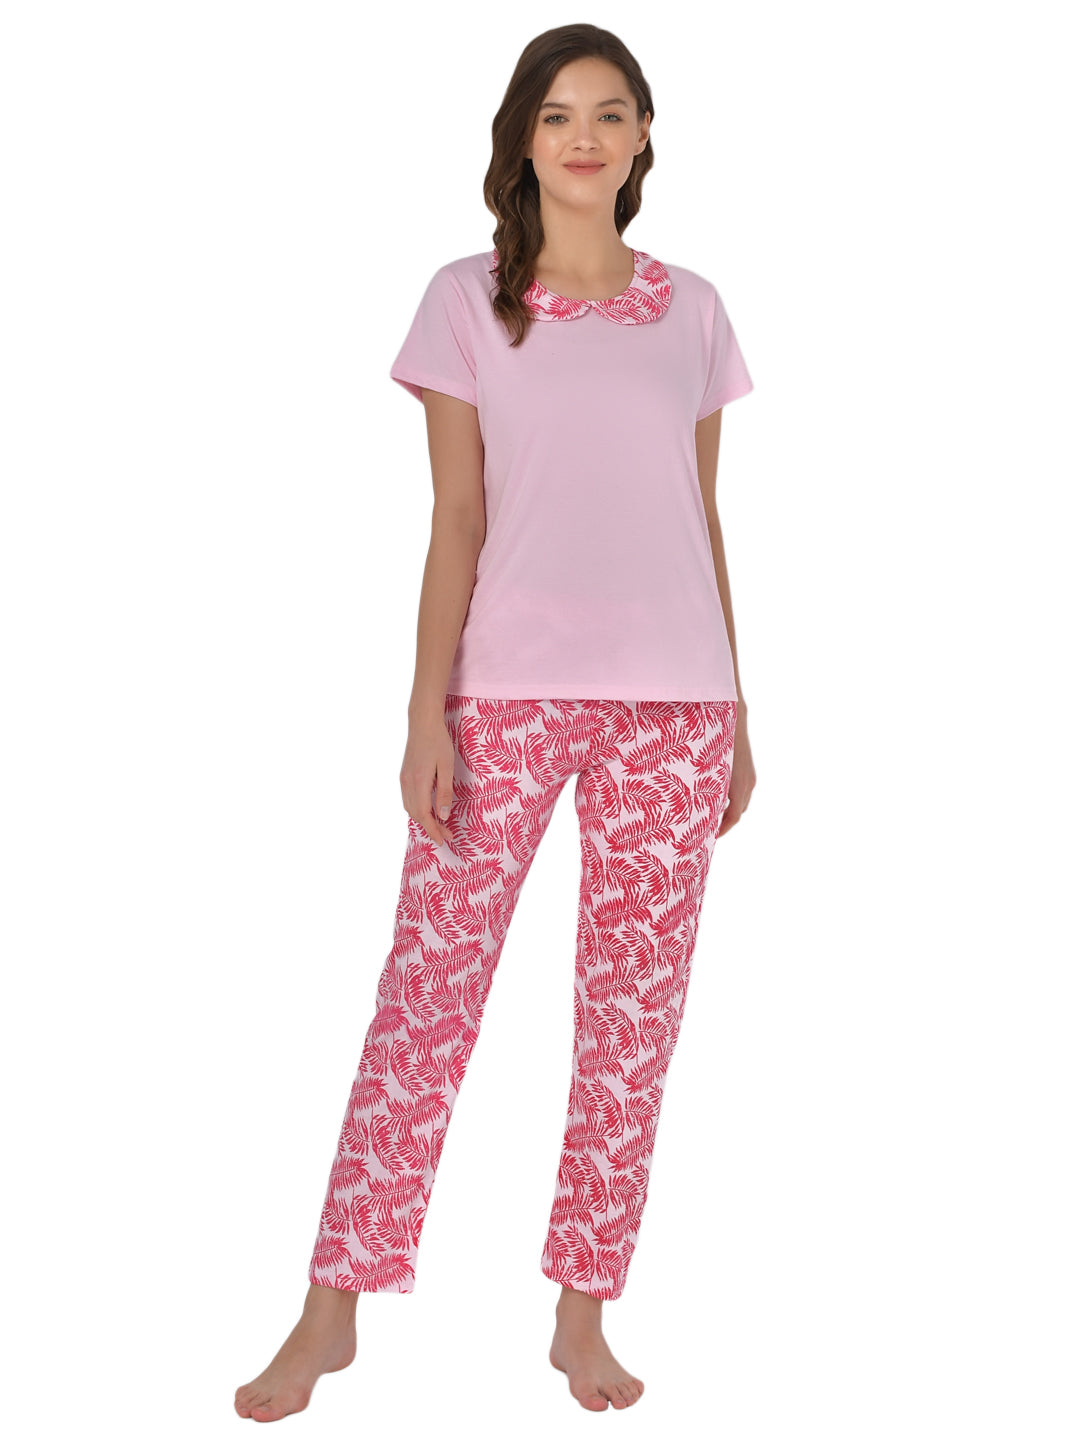 Klamotten Women's Baby Pink Allover Printed Top Pyjama Set N62Rb